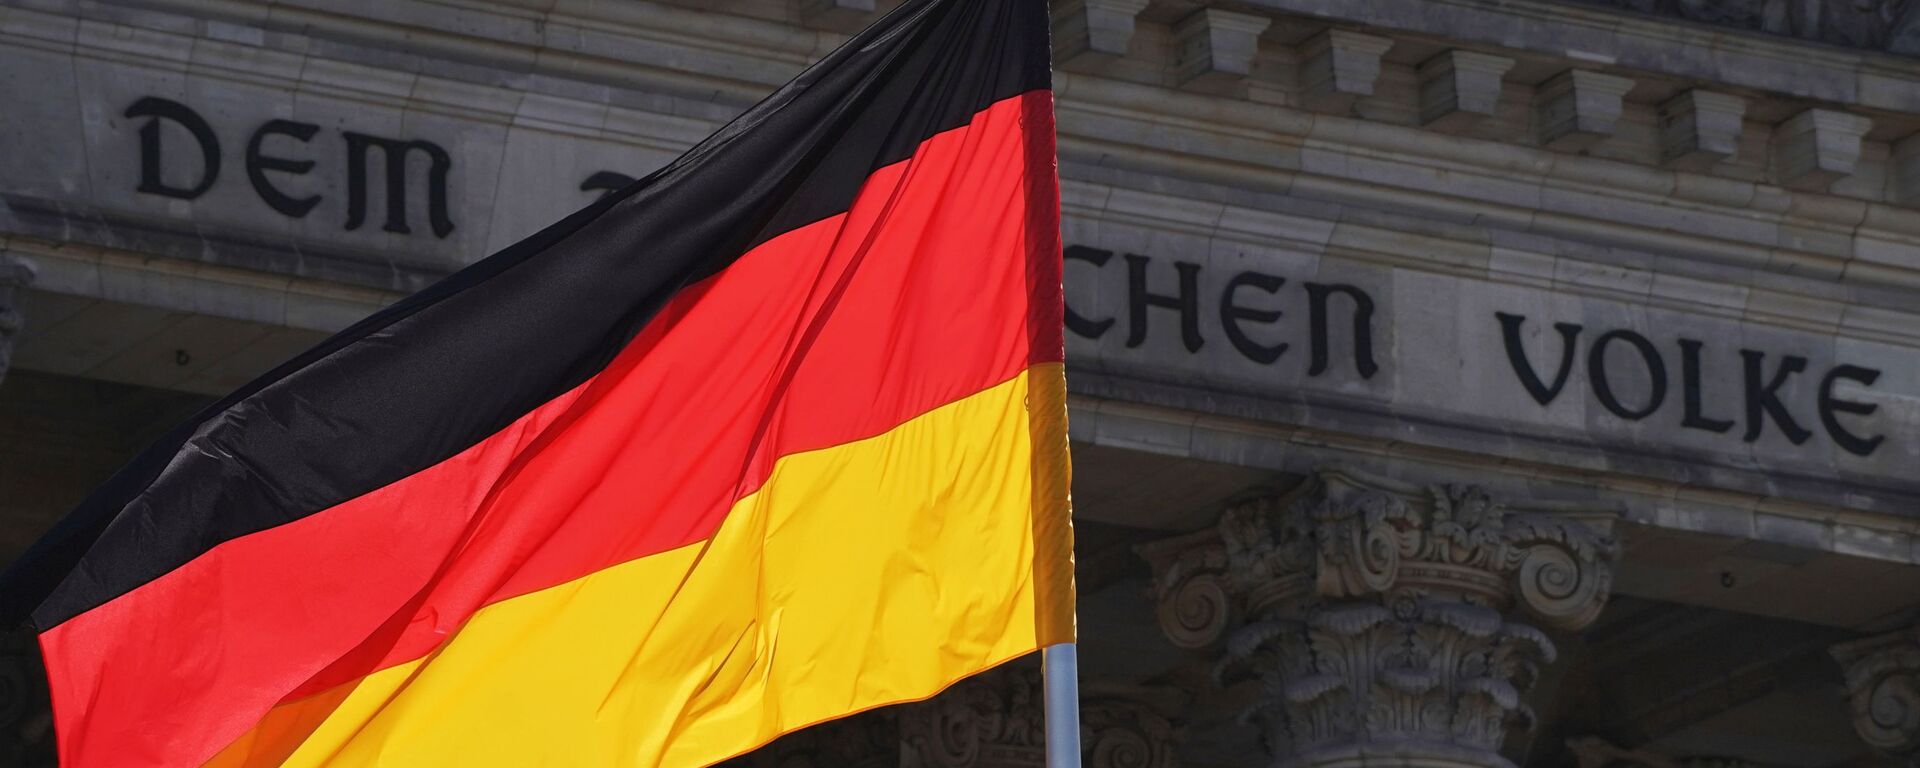 Флаг Германии у здания Рейхстага в Берлине. - Sputnik Қазақстан, 1920, 26.12.2021